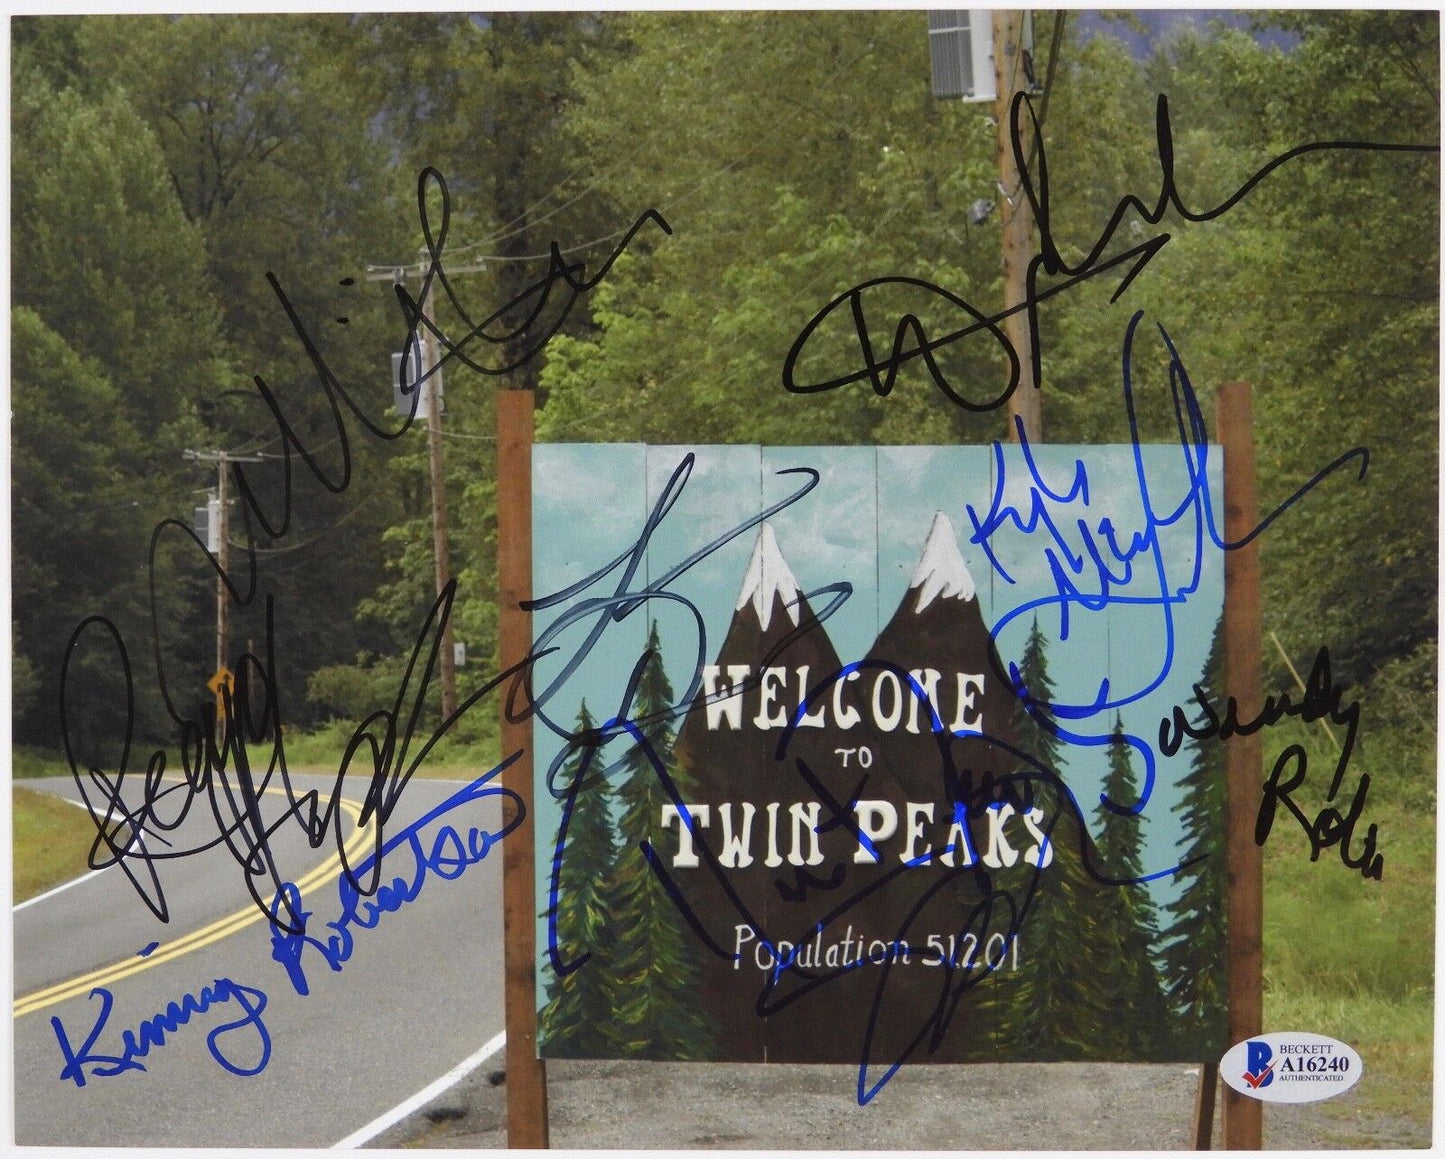 Twin Peaks Cast Autograph Signed Photo Beckett 8 x 10 Kyle MacLachlan Laura Dern